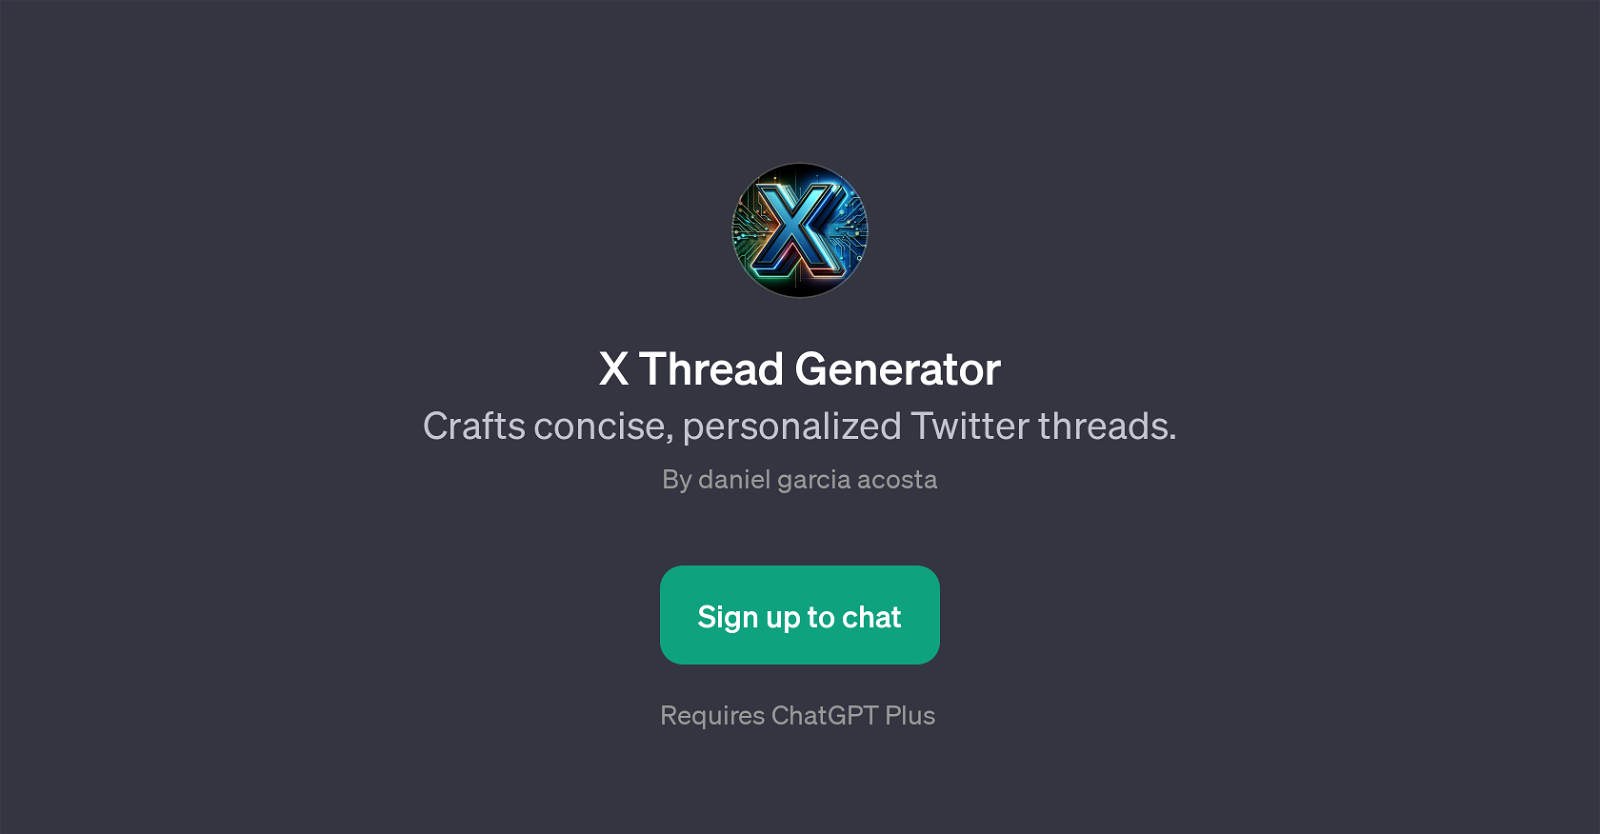 X Thread Generator website